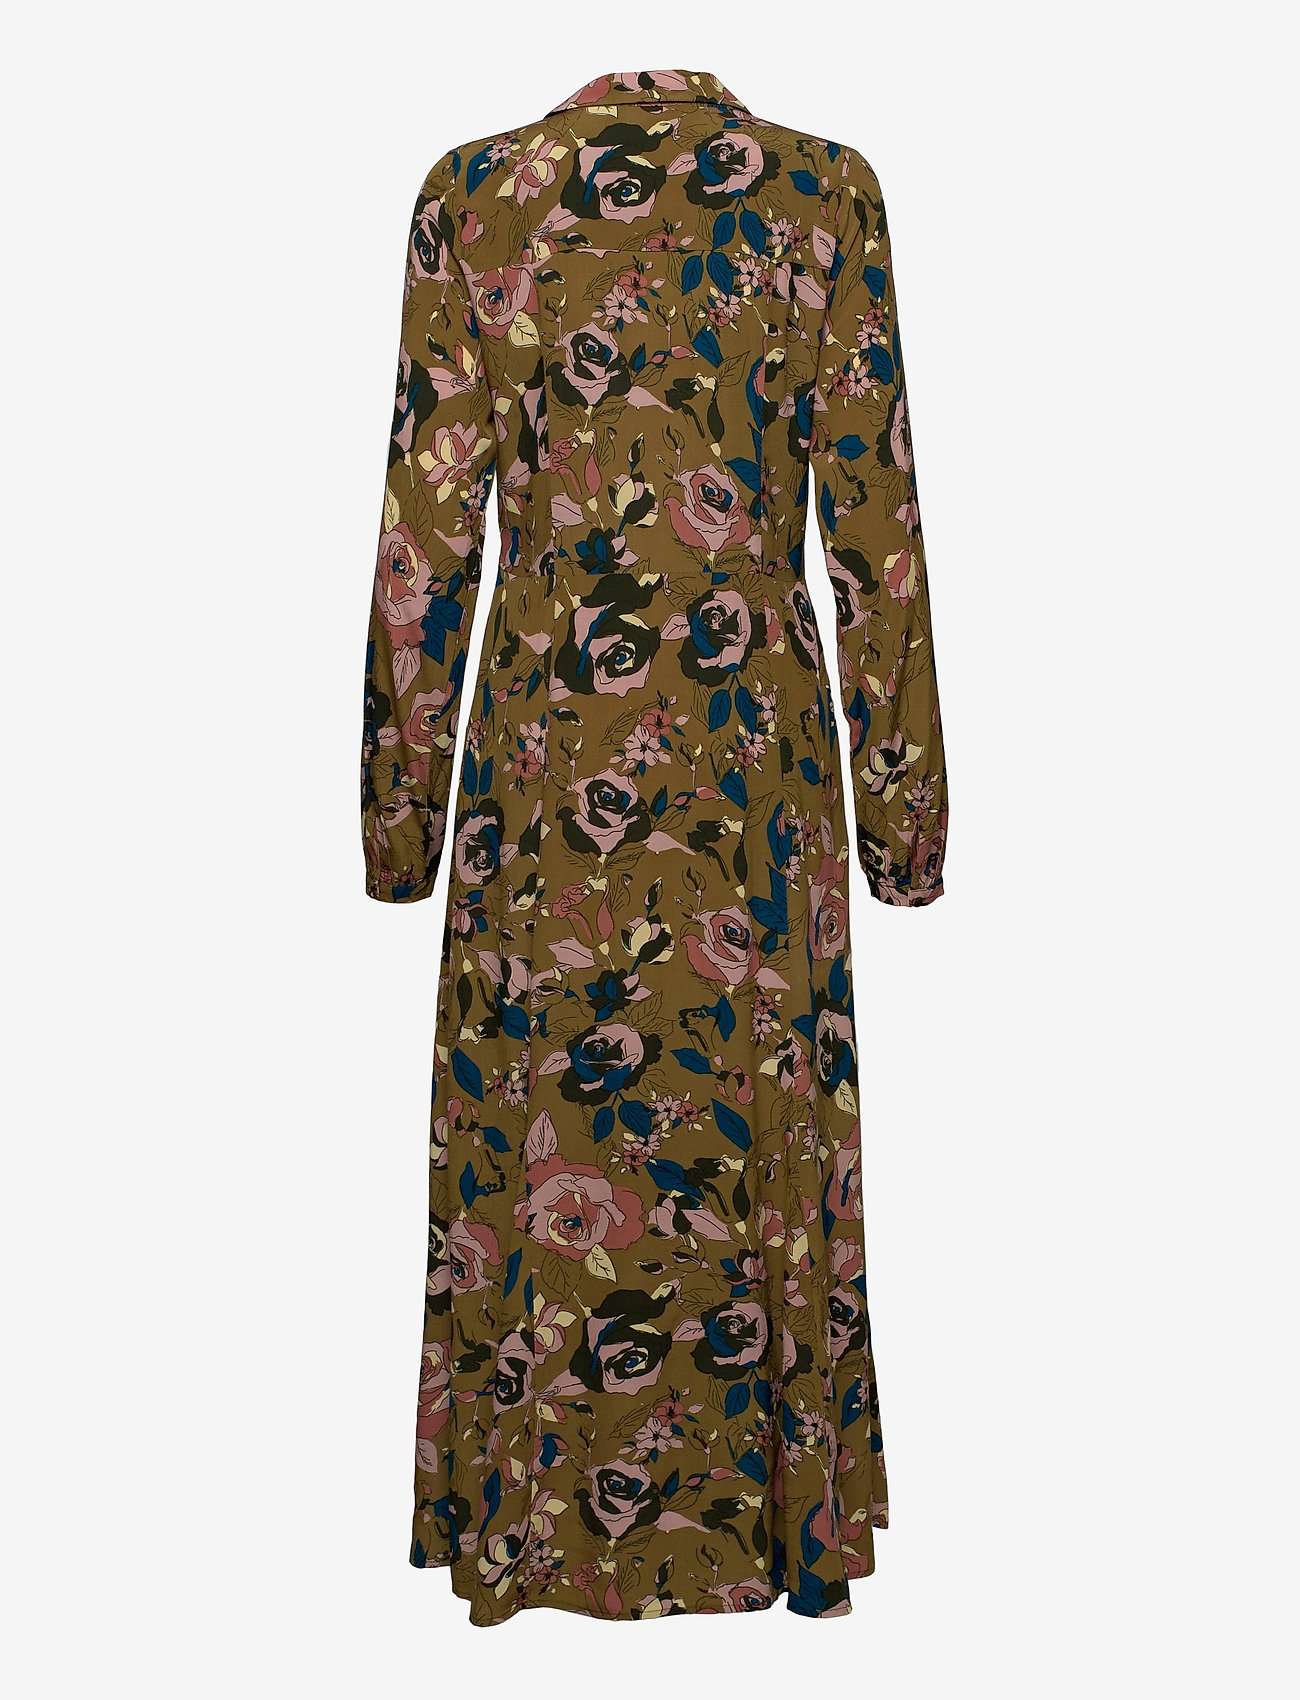 Minus - Vivie long dress - sukienki koszulowe - olive soft rose print - 1